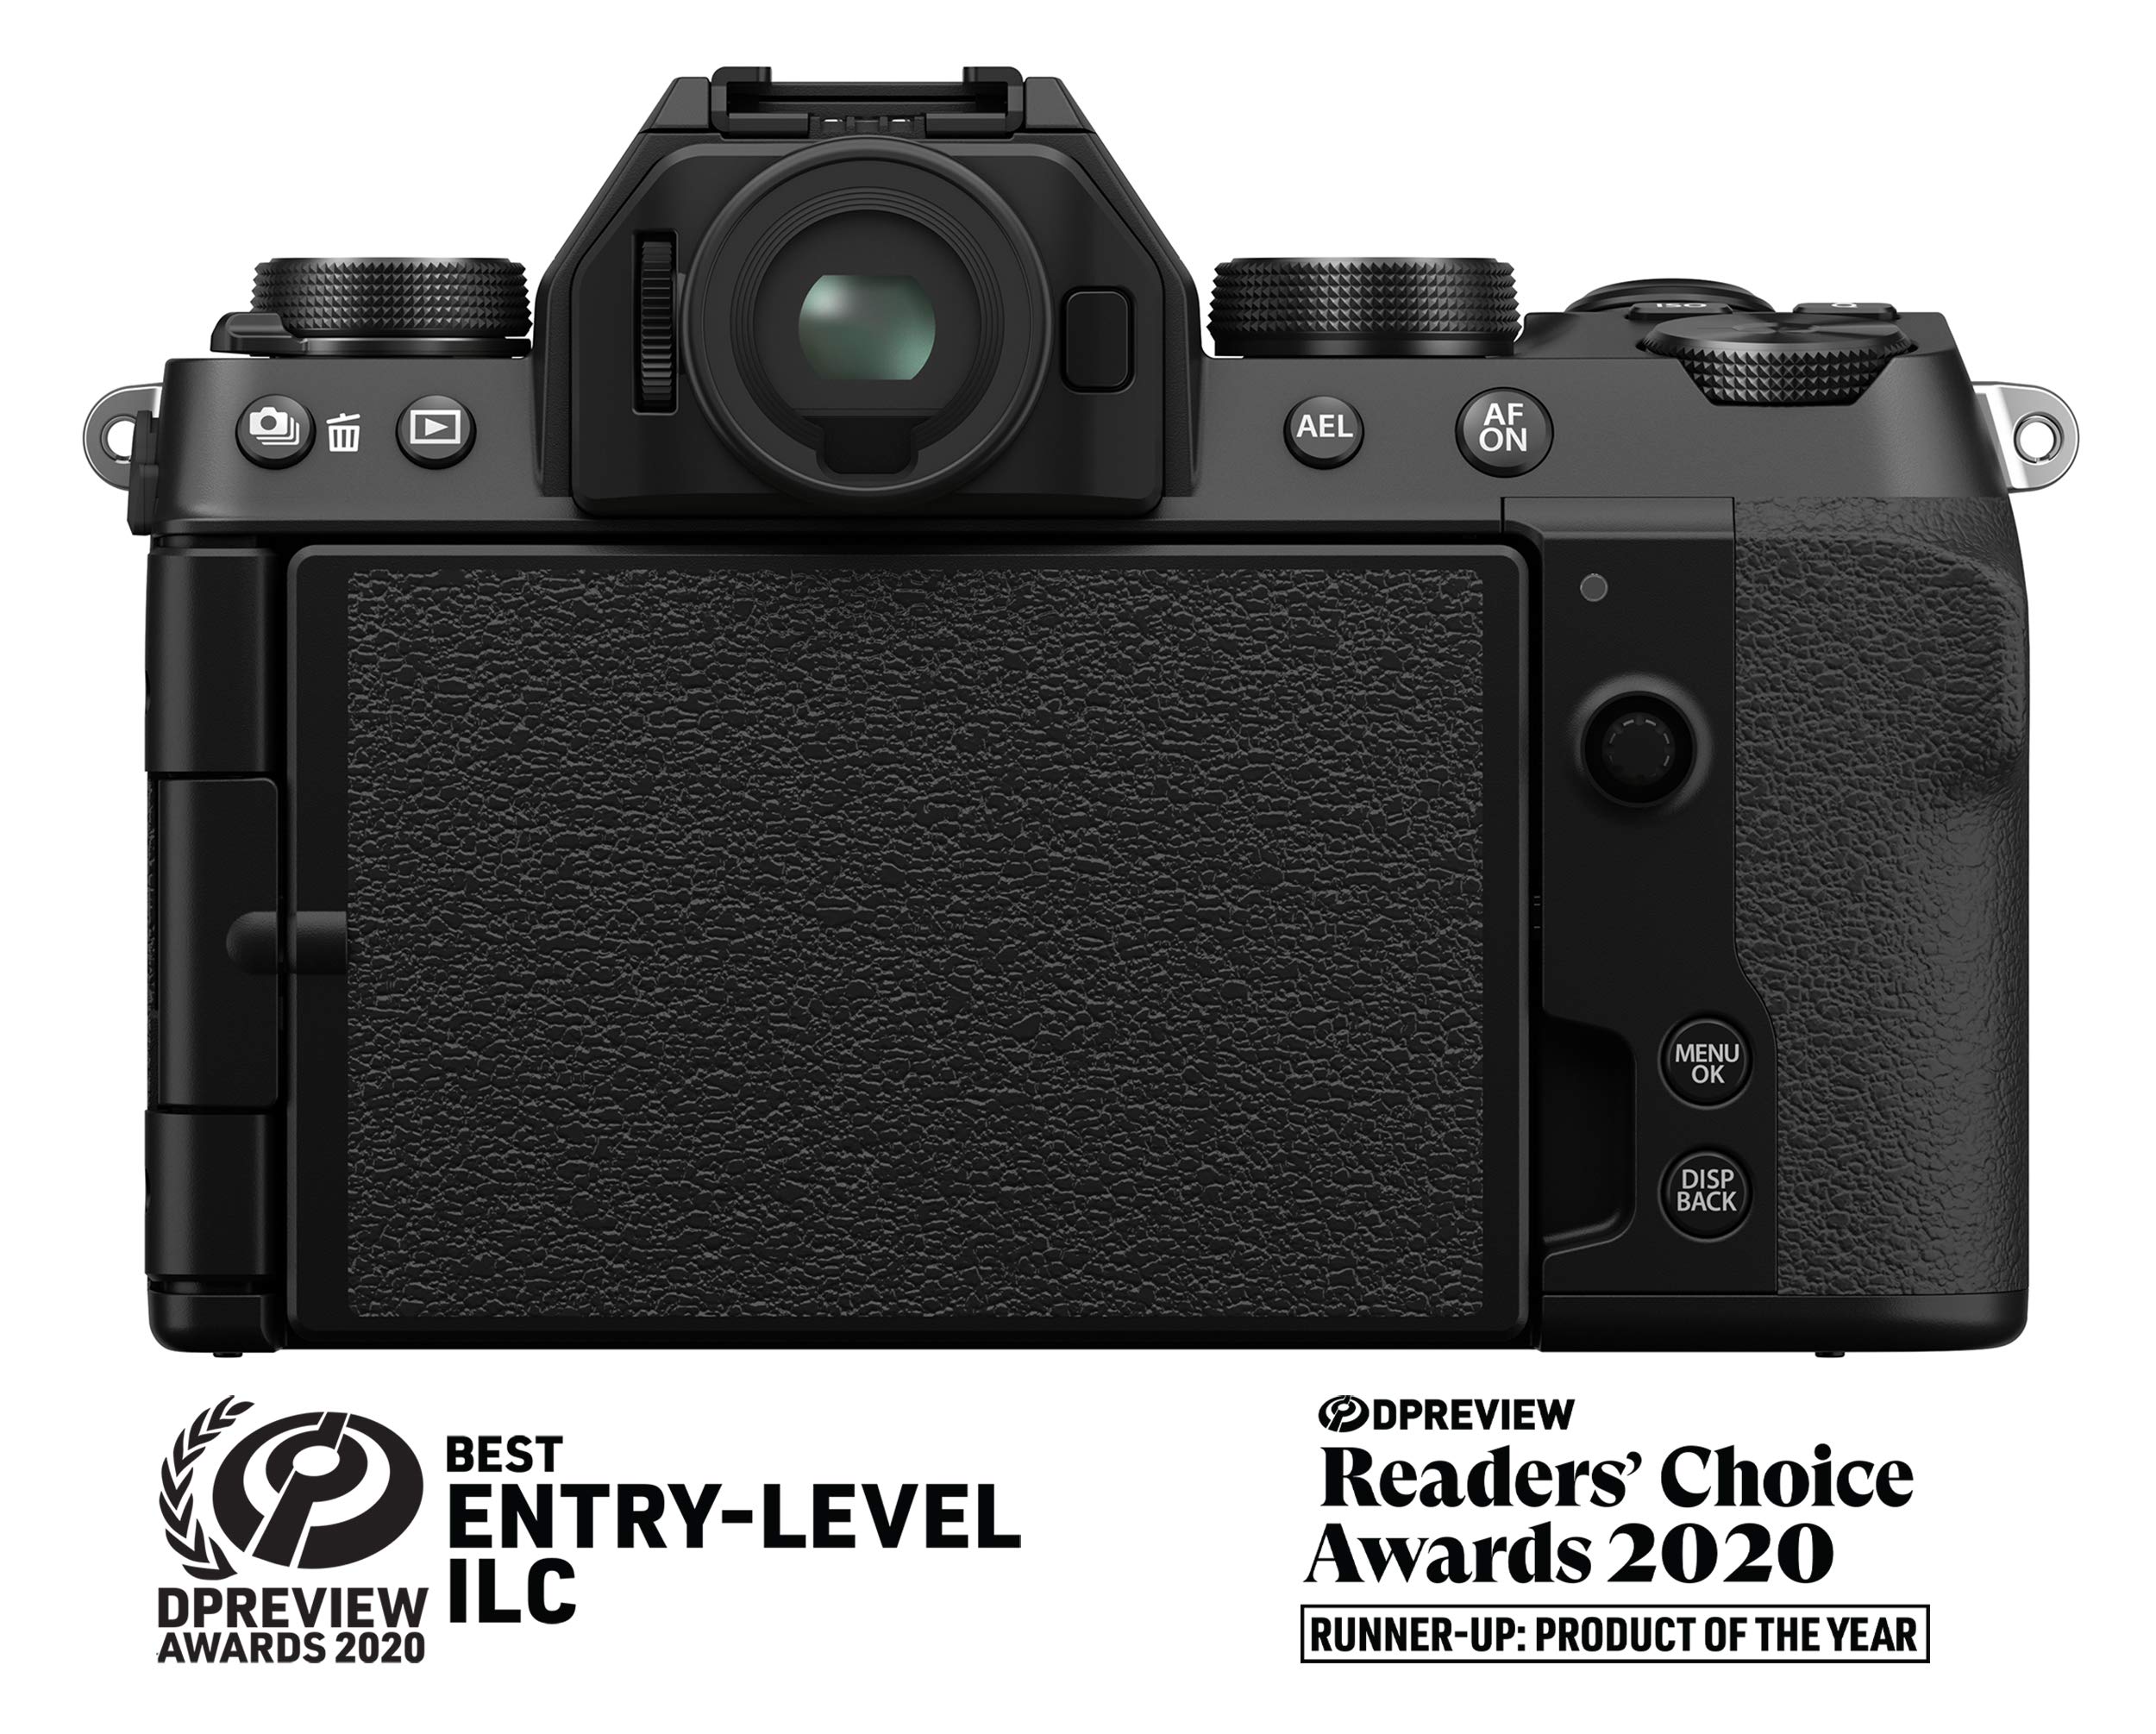 Fujifilm X-S10 Mirrorless Camera Body - Black